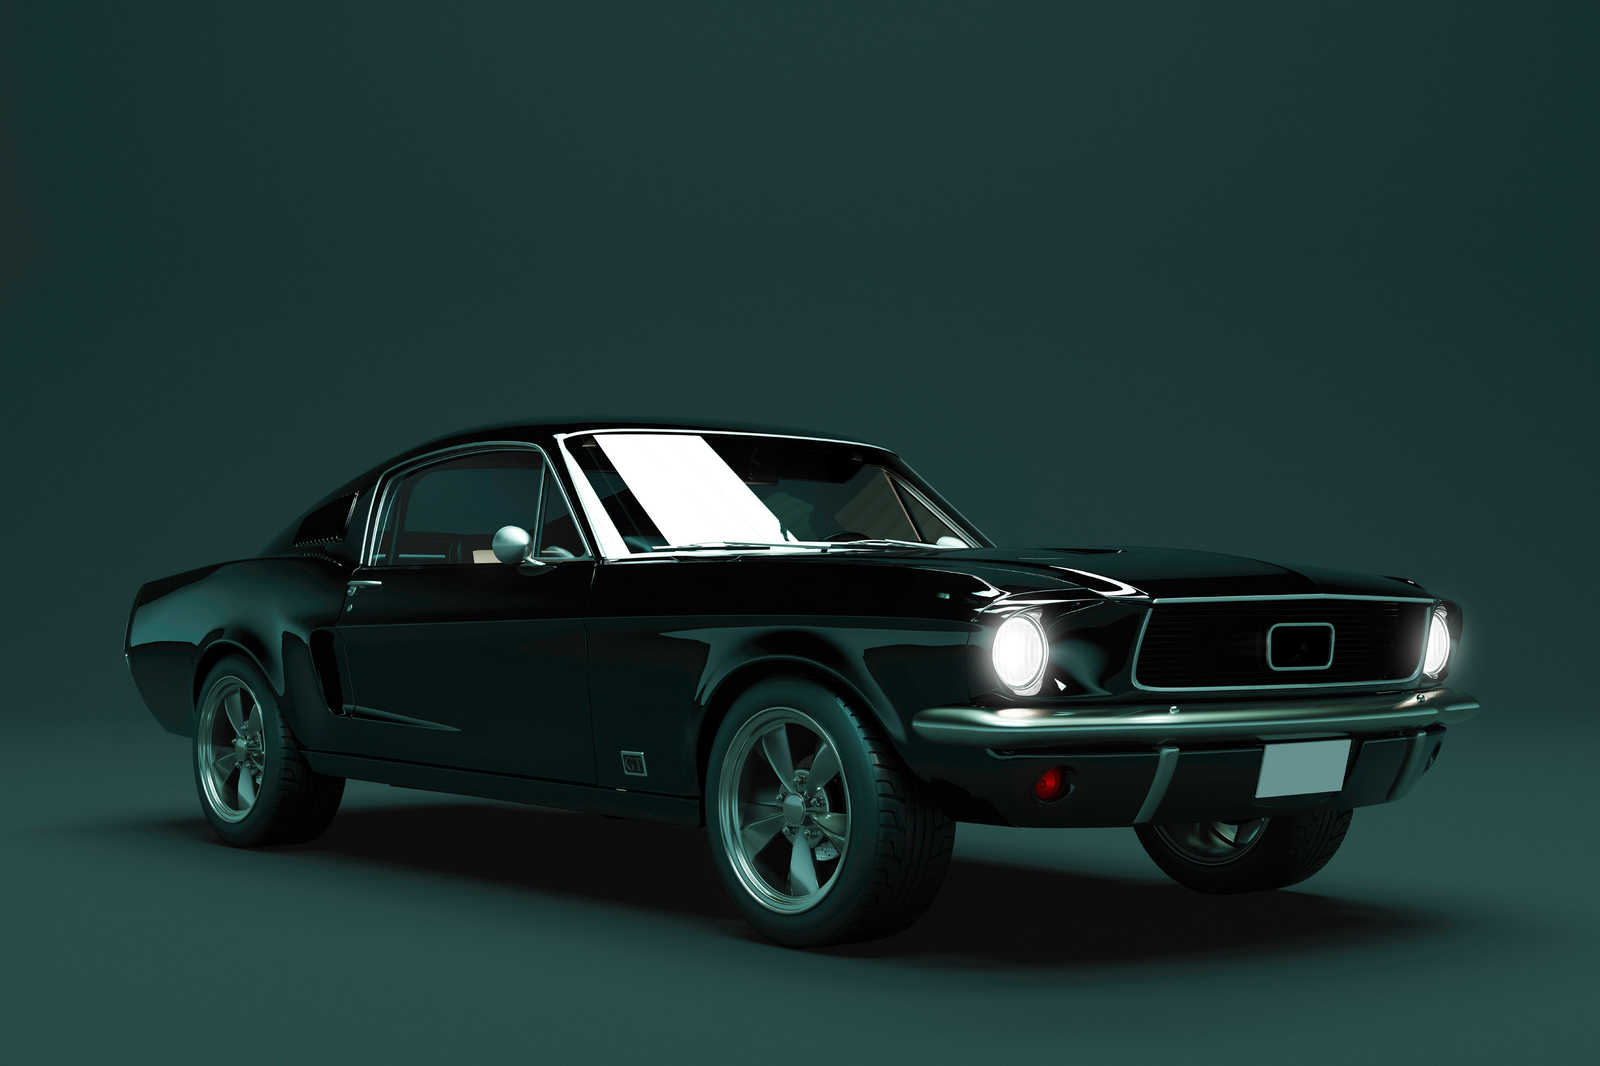             Mustang 2 - Toile, Mustang 1968 Vintage Car - 0,90 m x 0,60 m
        